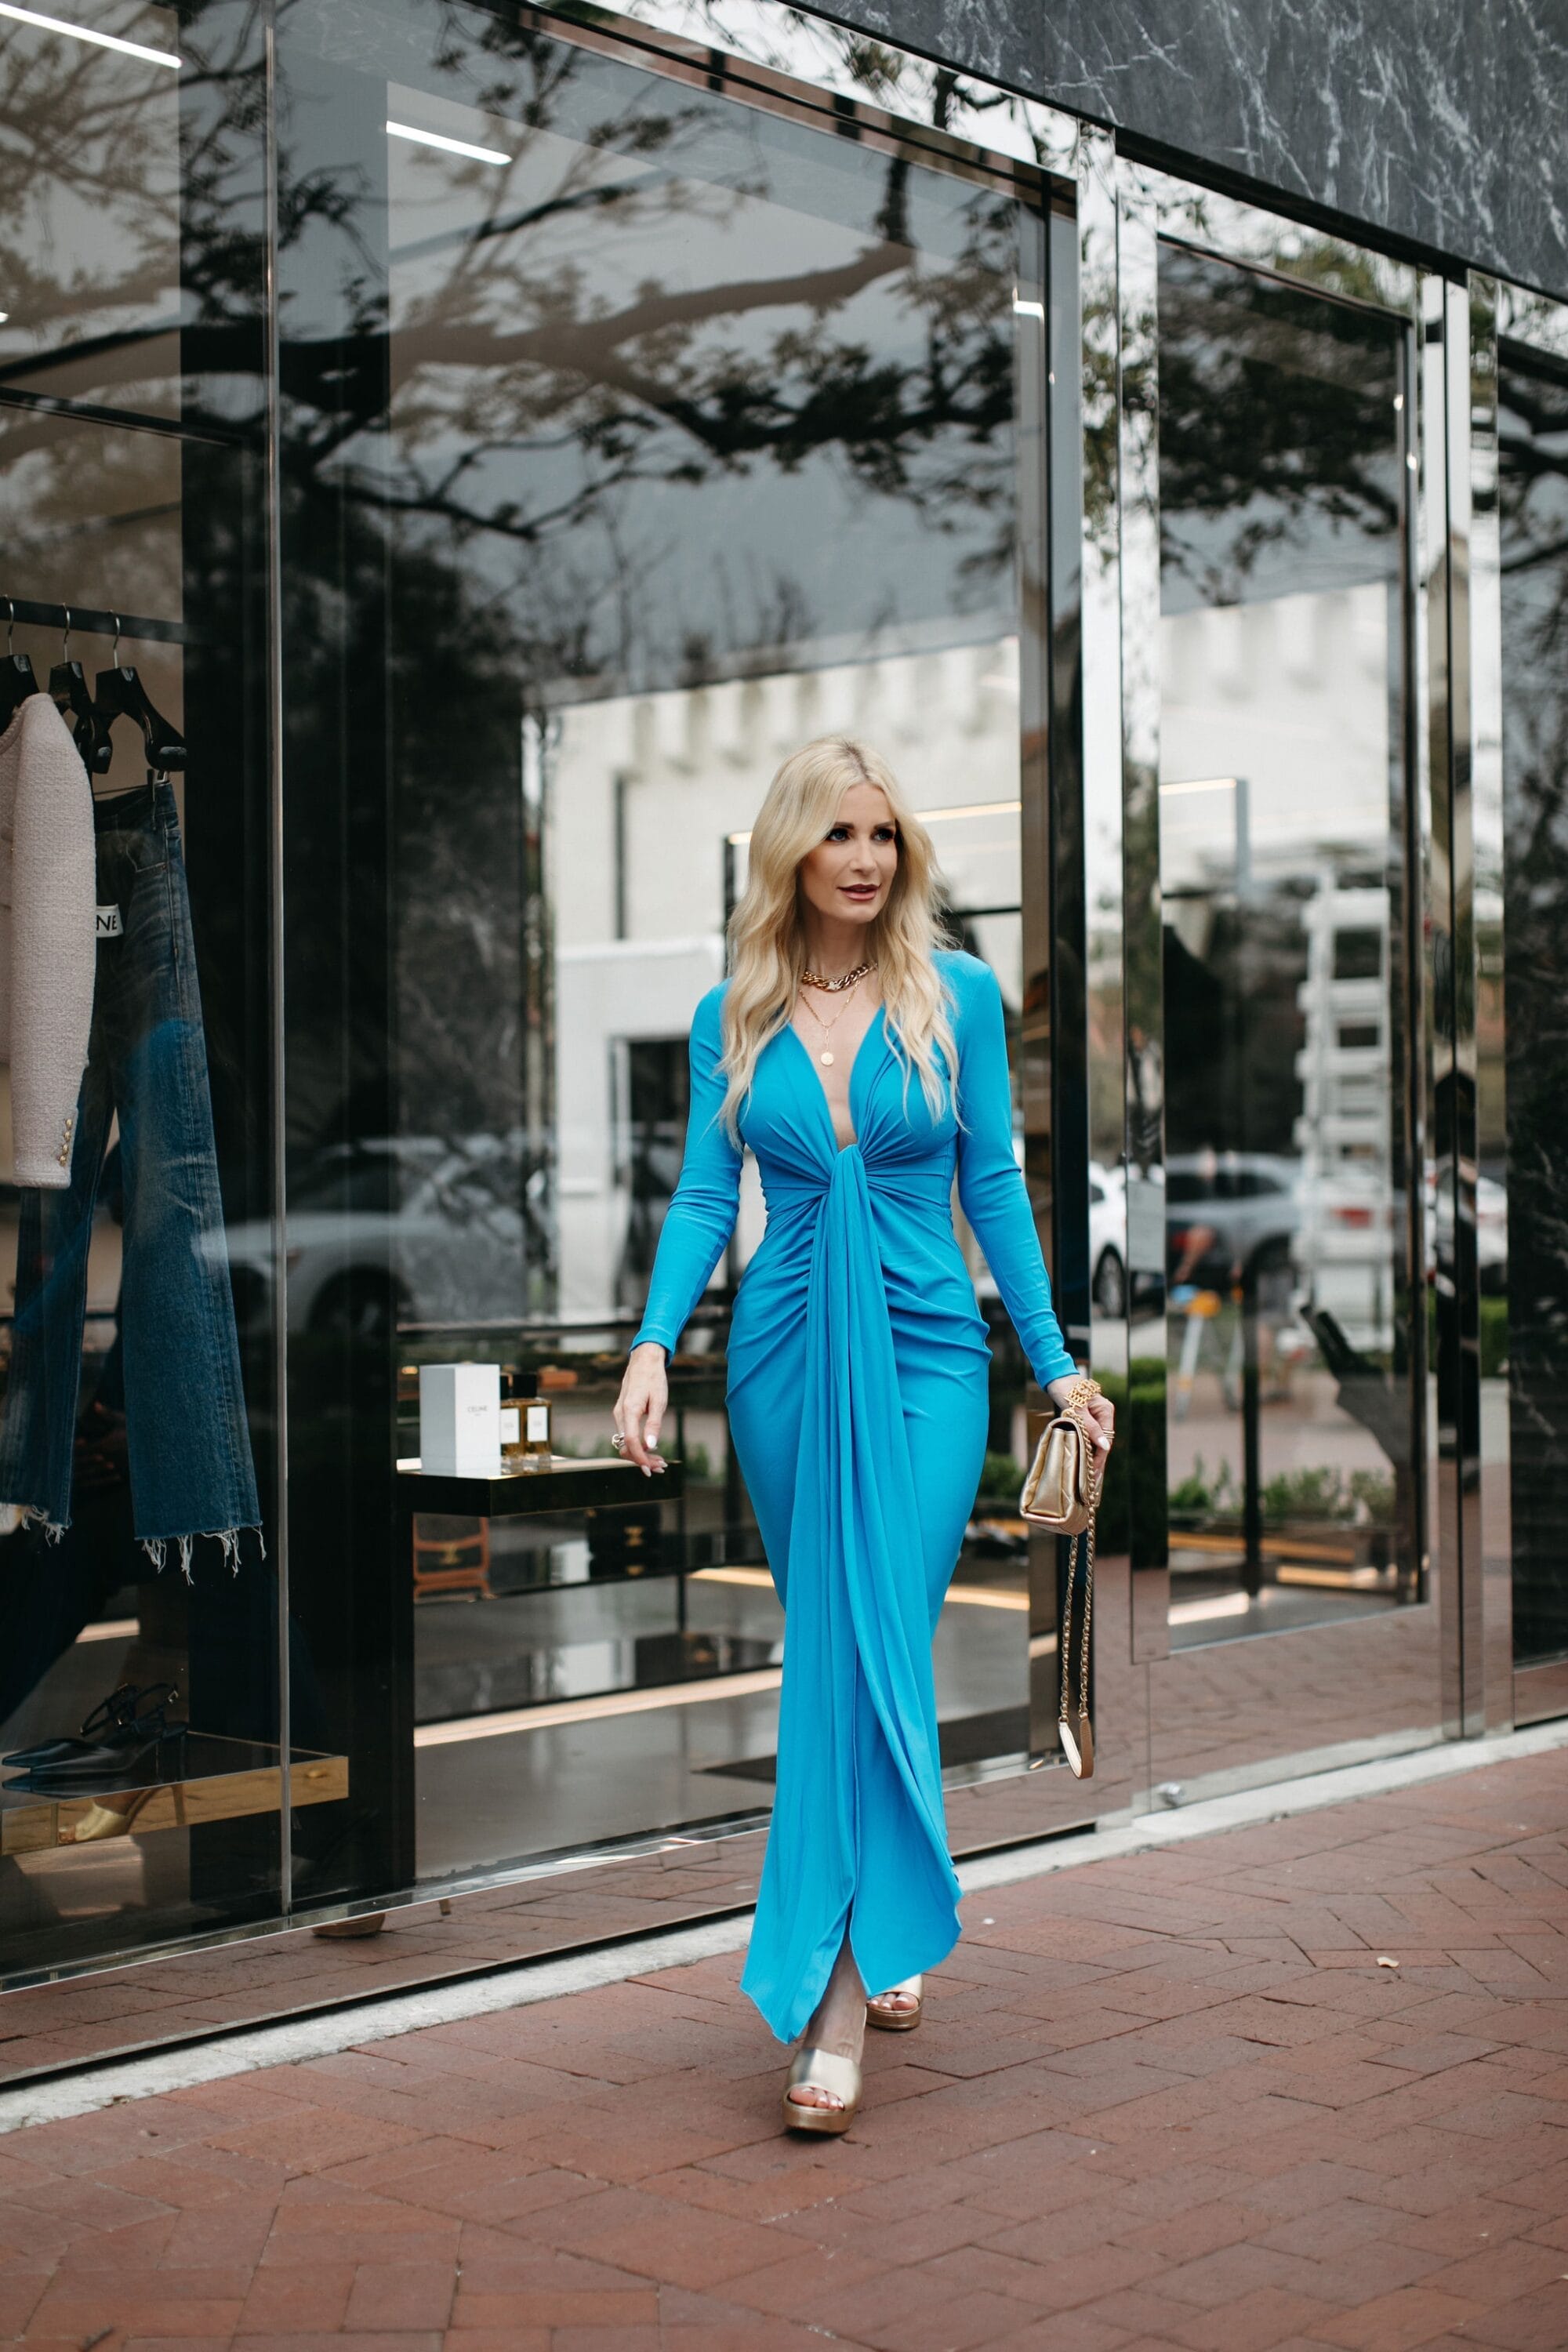 Over 40 Dallas woman wearing azure blue midin dress with gold platform heels.